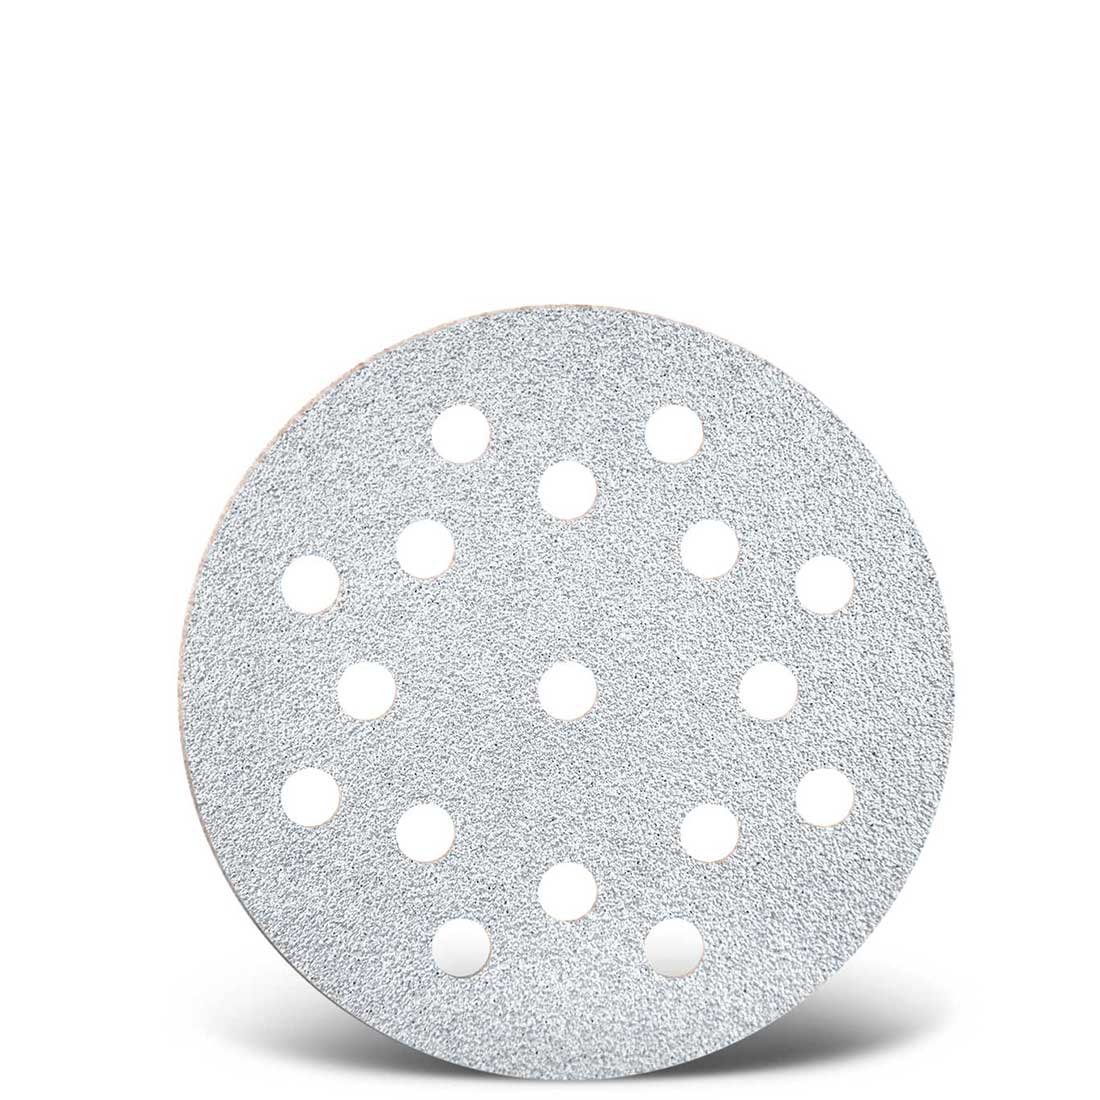 MENZER hook & loop sanding discs for random orbital sanders, G40–400, Ø 125 mm / 17 hole / stearated aluminium oxide